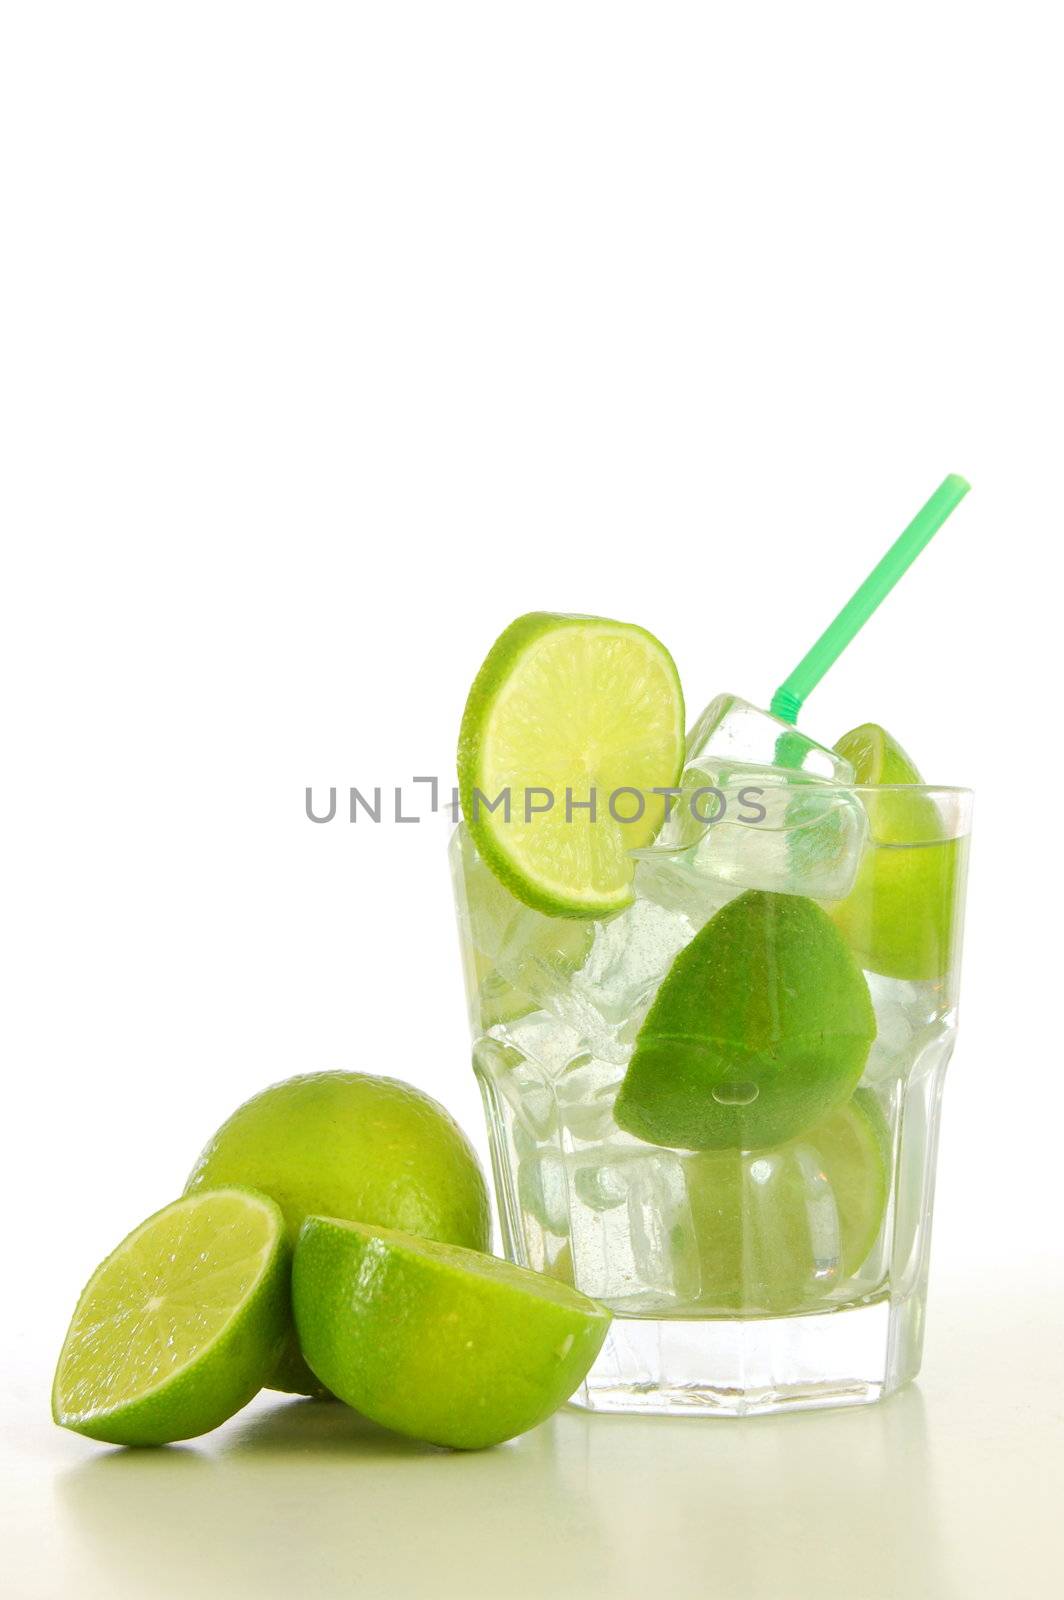 cocktail drink with lime like Caipirinha or mojito